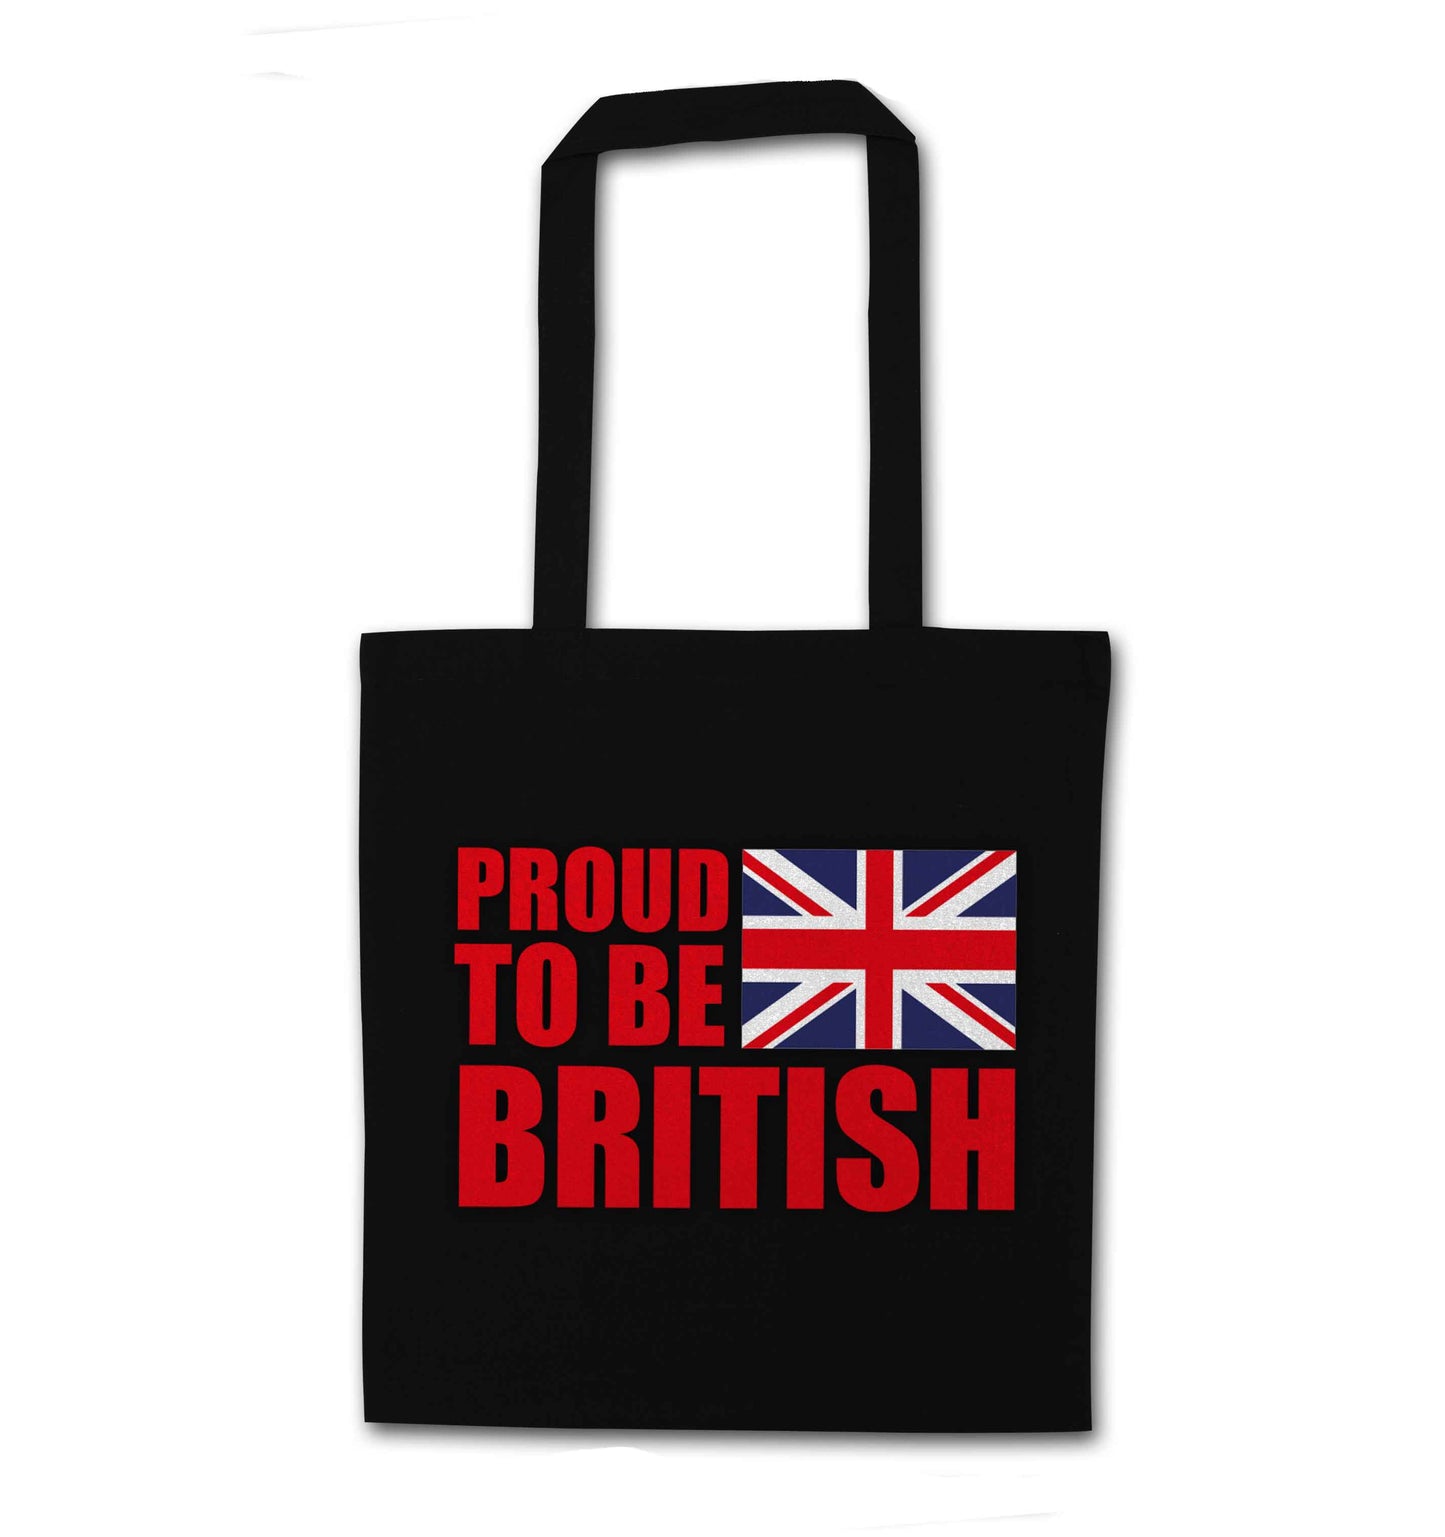 Proud to be British black tote bag